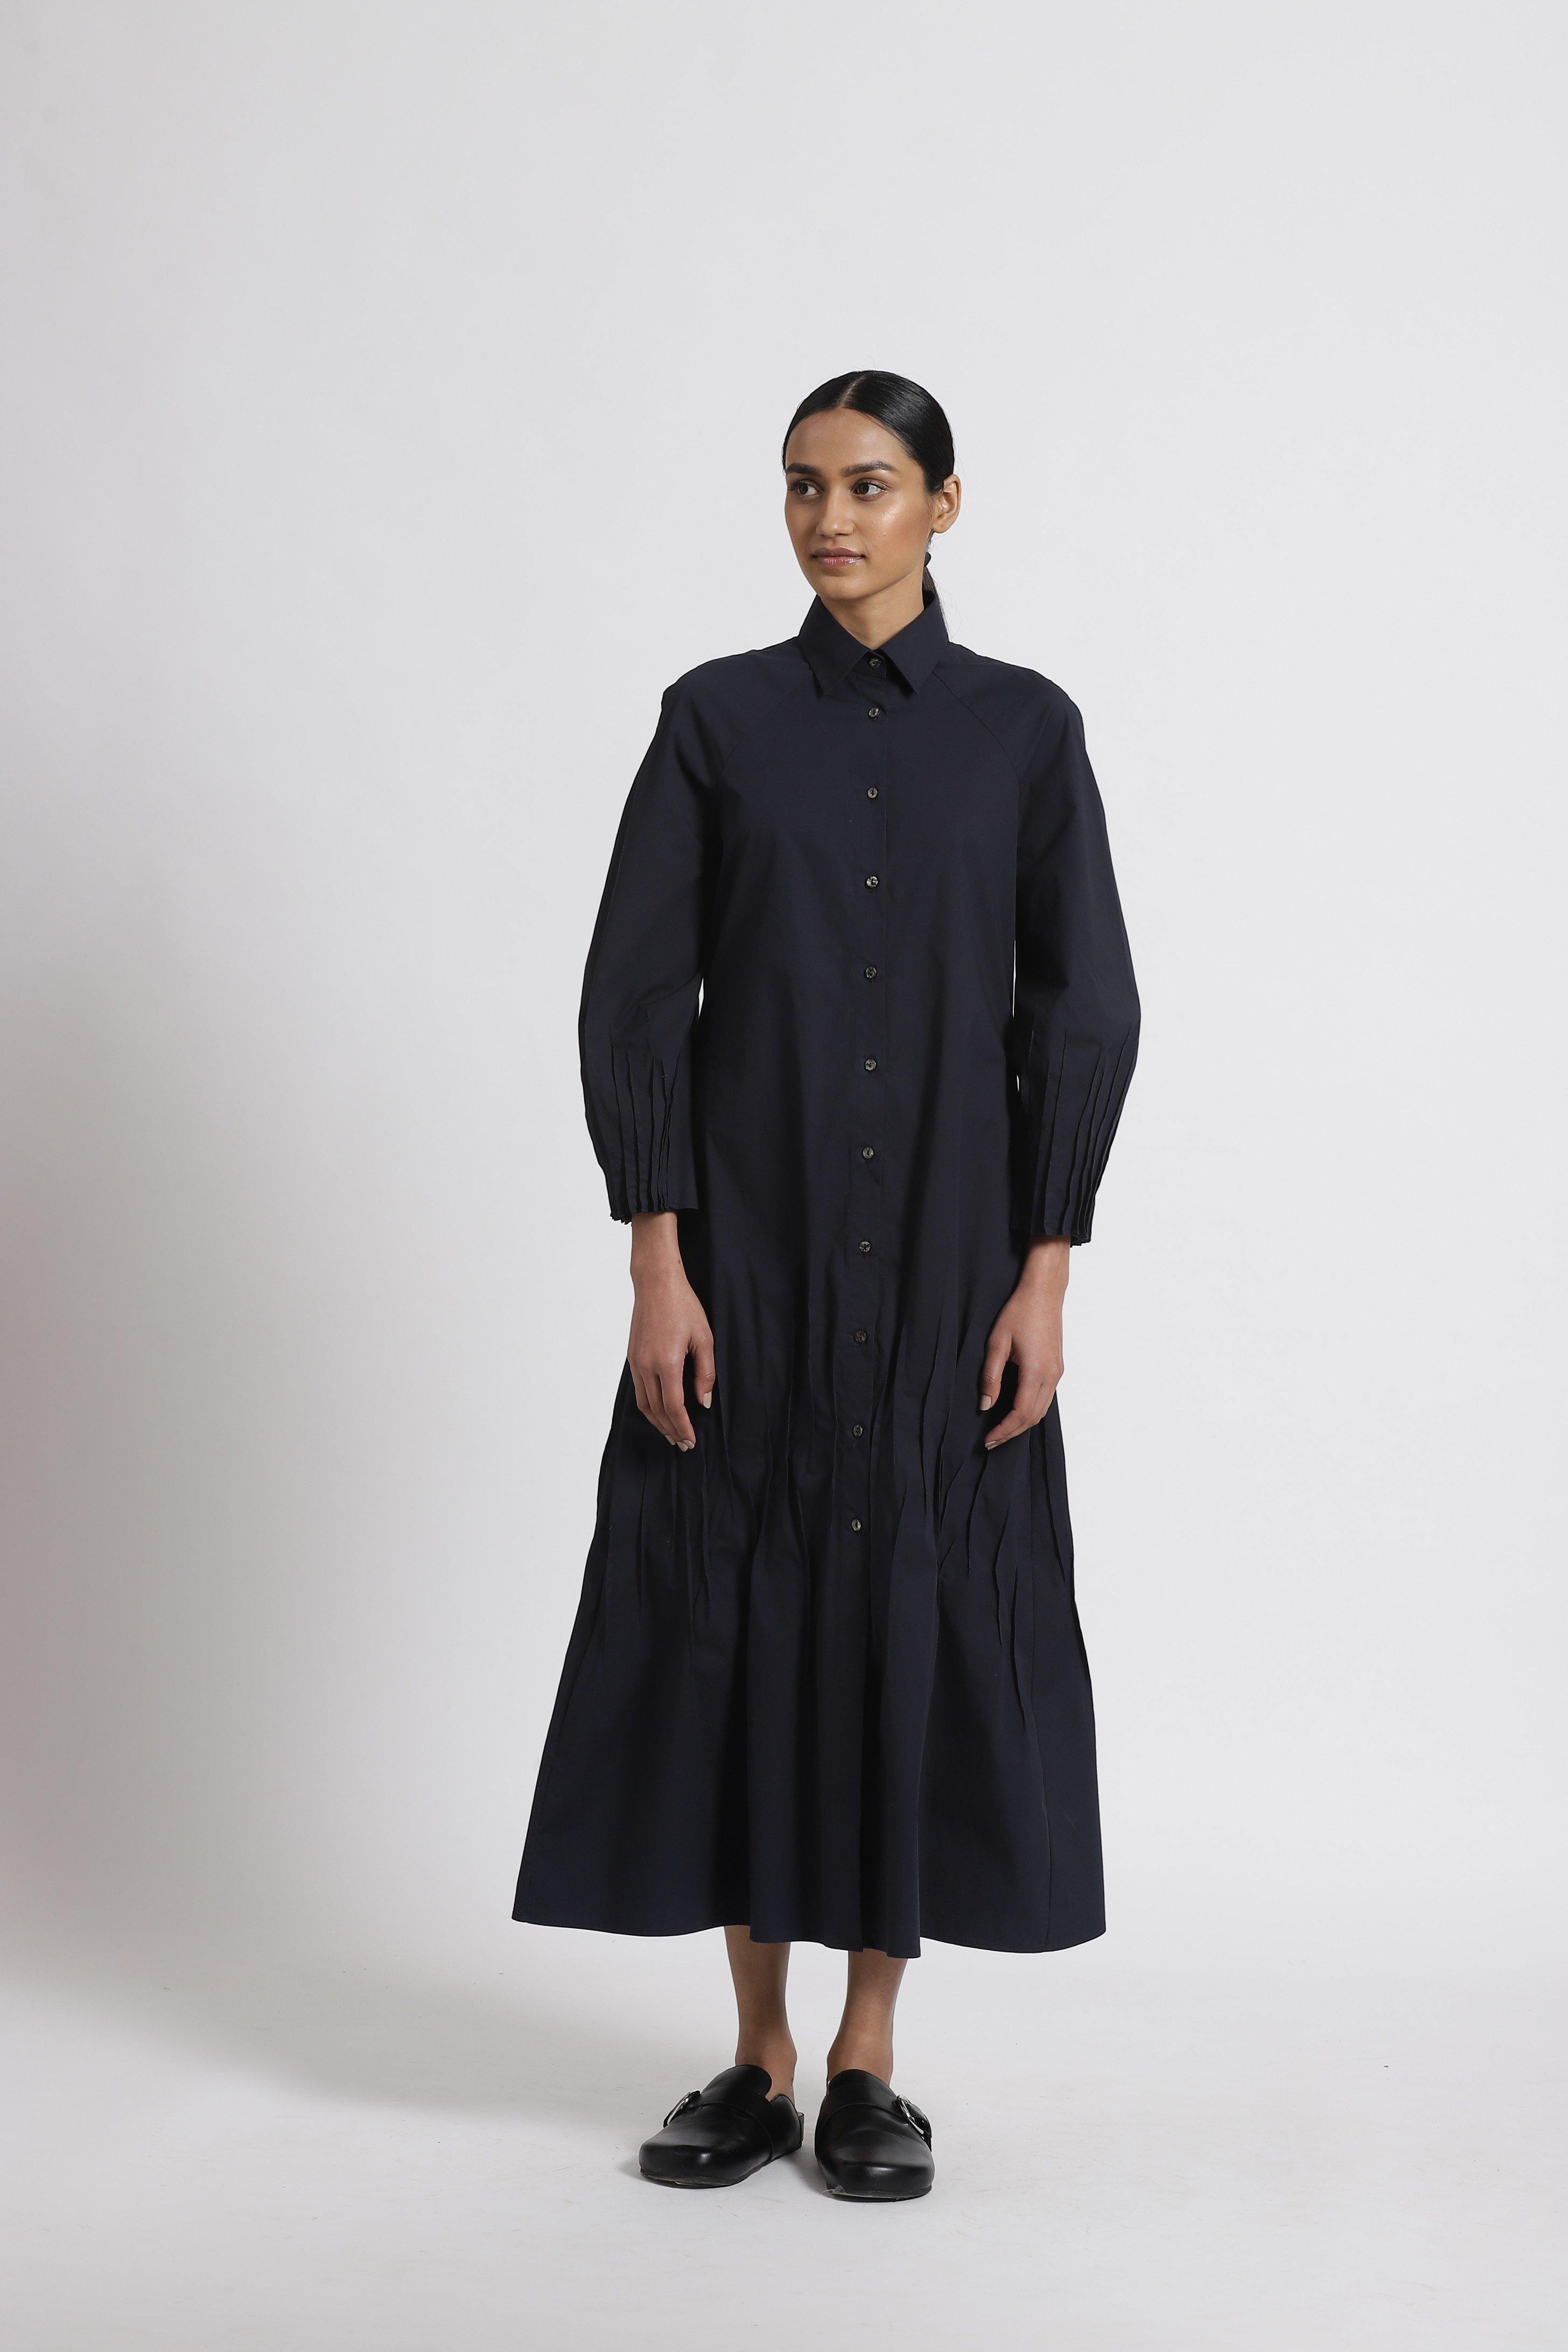 Armilla Dress - Genes online store 2020